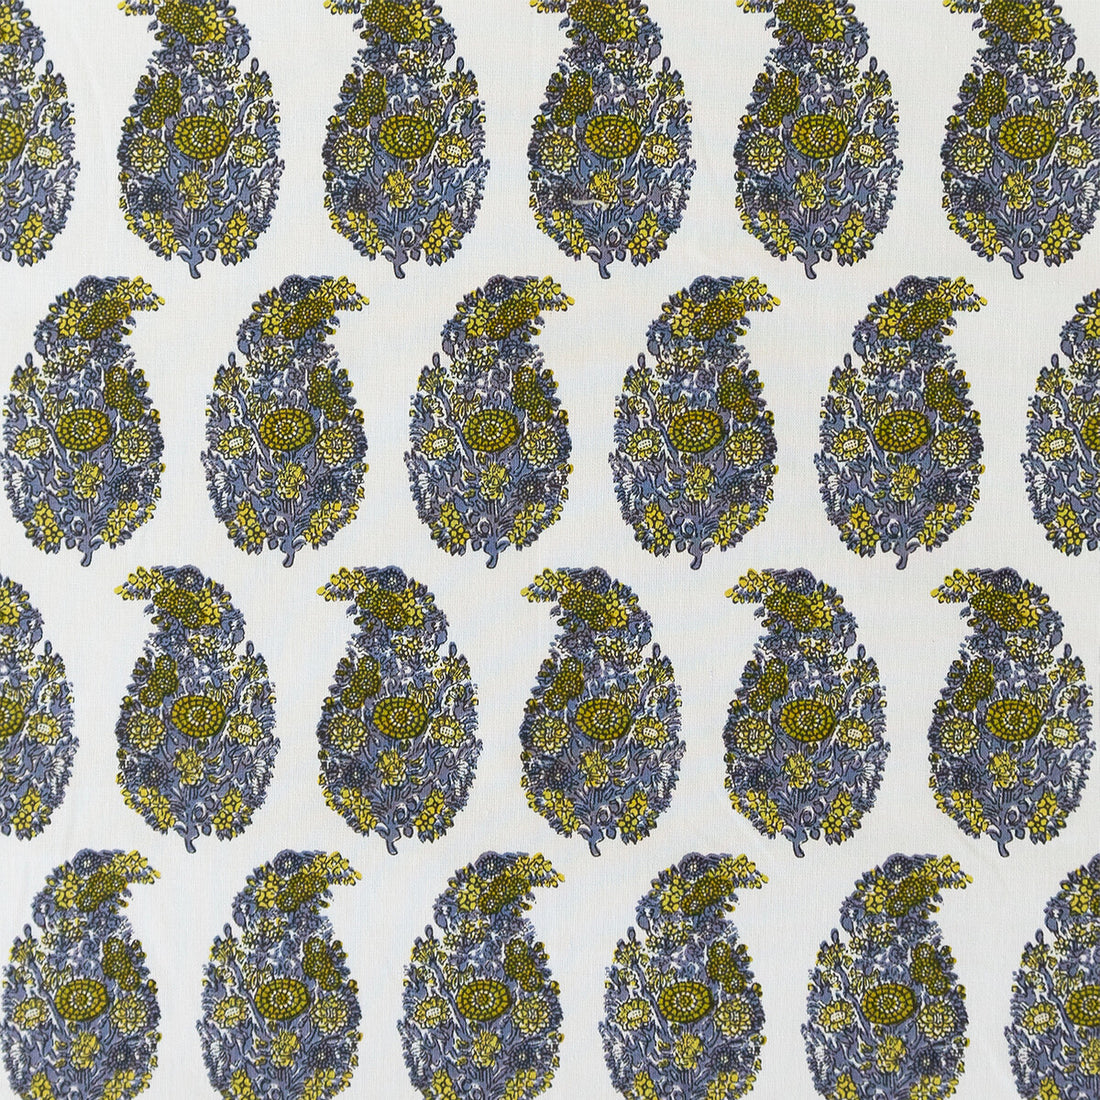 Tarsila fabric in mostaza/gris color - pattern LCT1029.005.0 - by Gaston y Daniela in the Lorenzo Castillo V collection